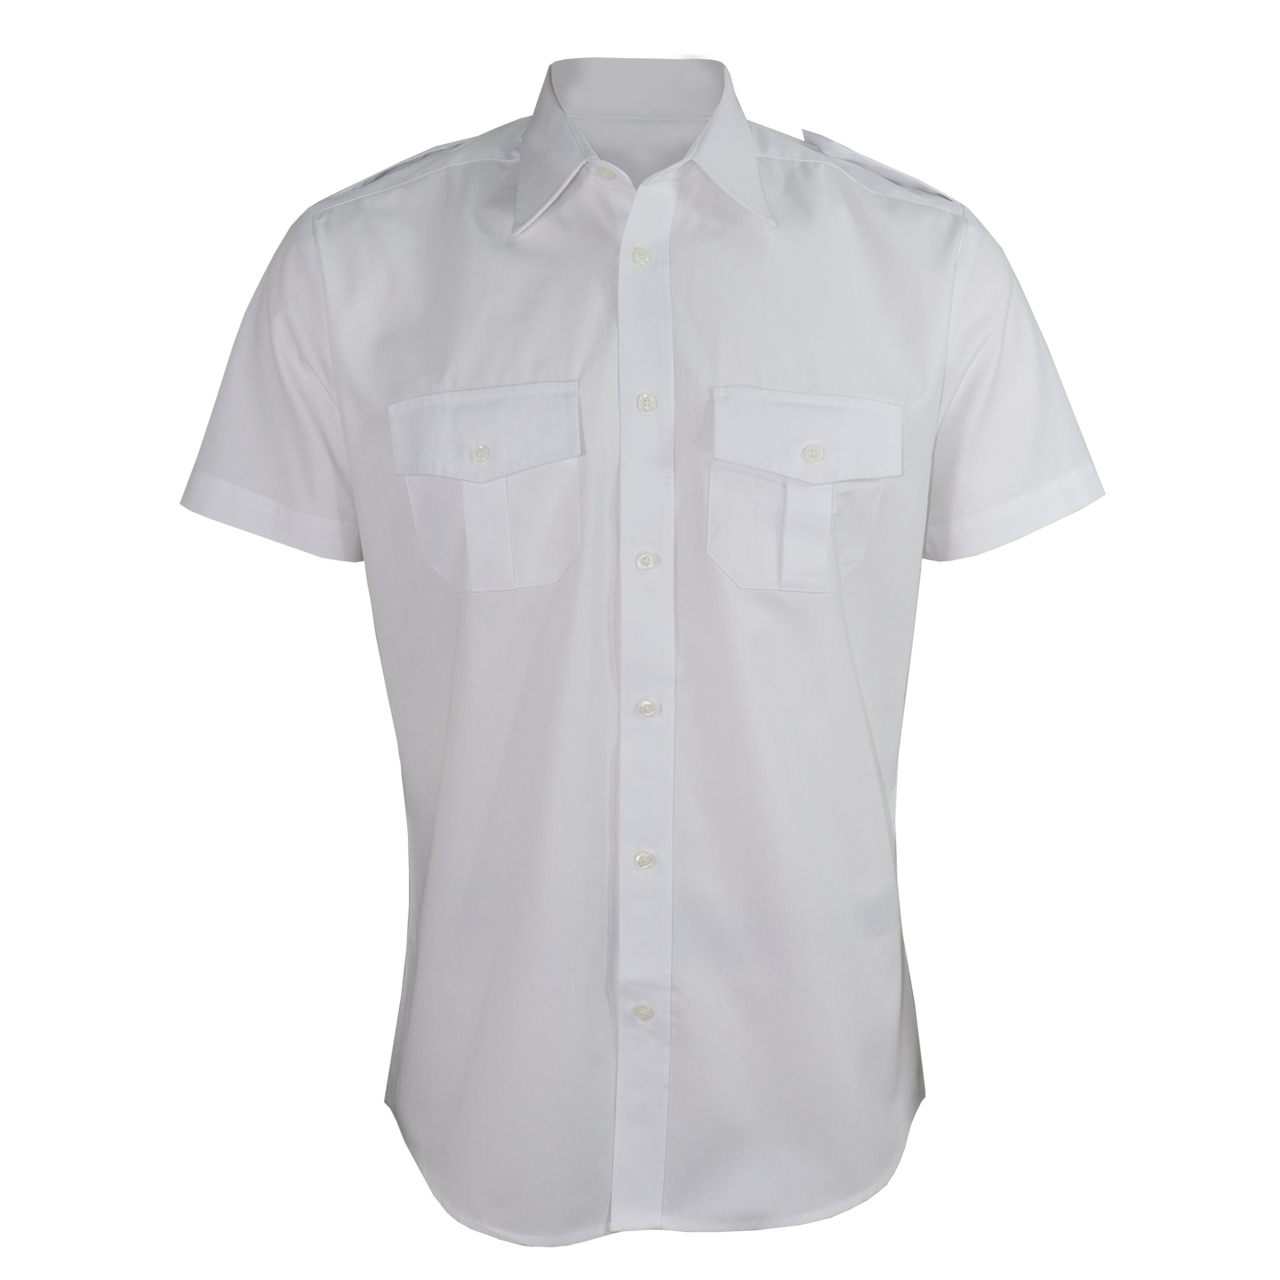 657 - Chemise militaire à manches courtes ||657 - Military short sleeve shirt